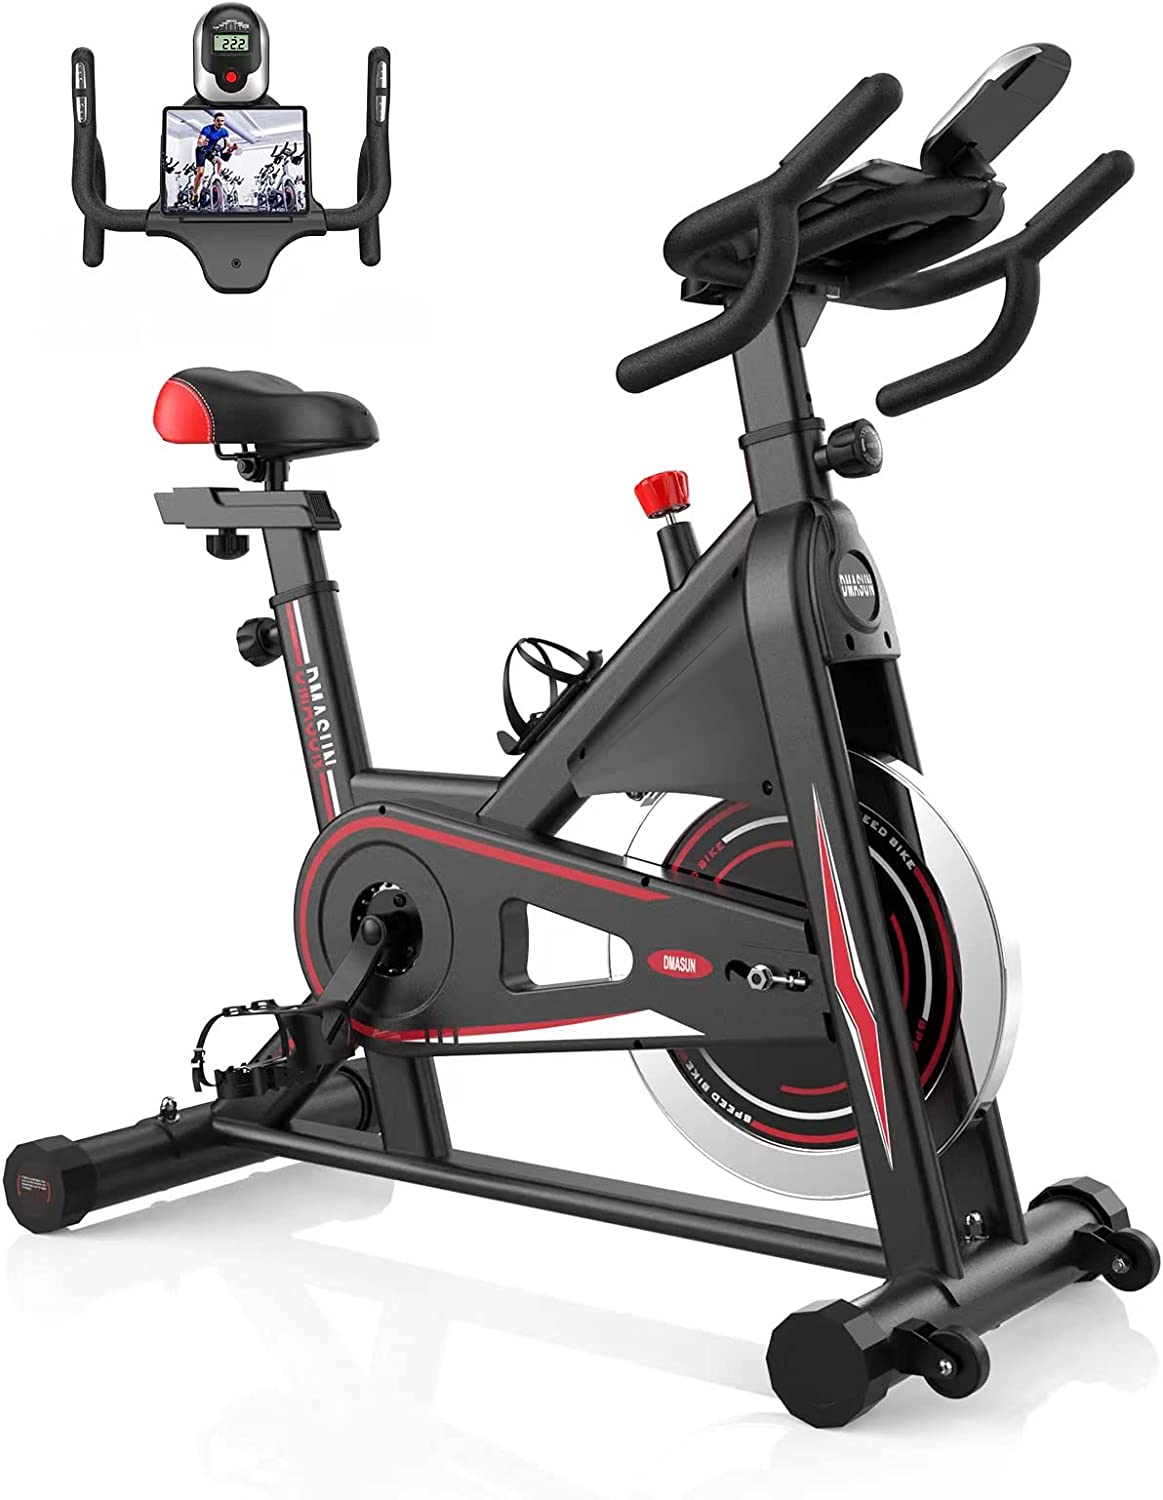 DMASUN Magnetic Resistance Pro Indoor Cycling Bike, 350lbs Capacity I